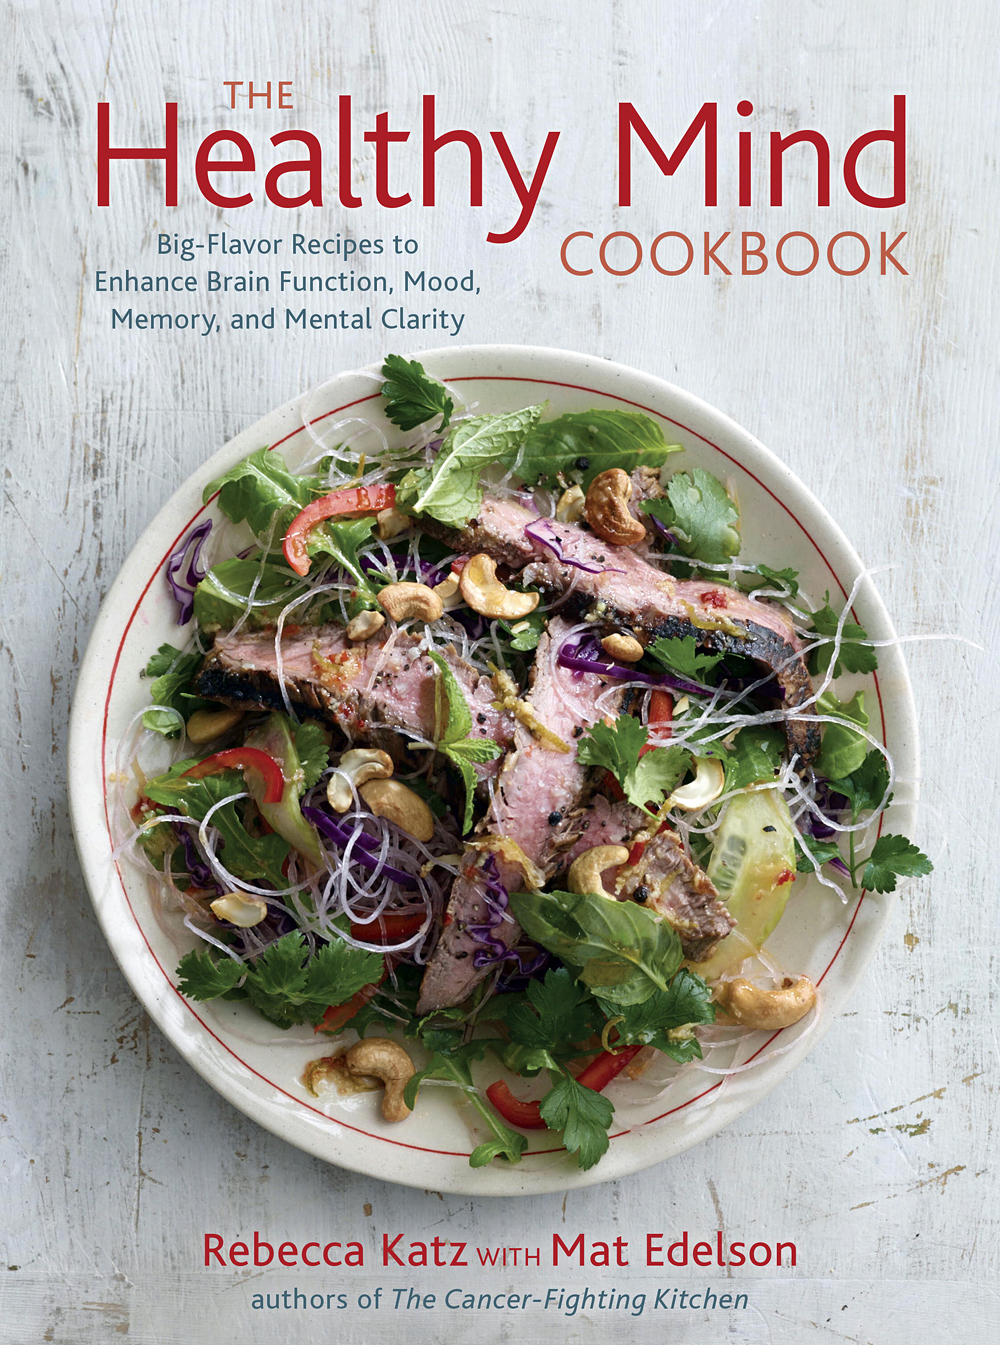 The Healthy Mind Cookbook. by Rebecca Katz